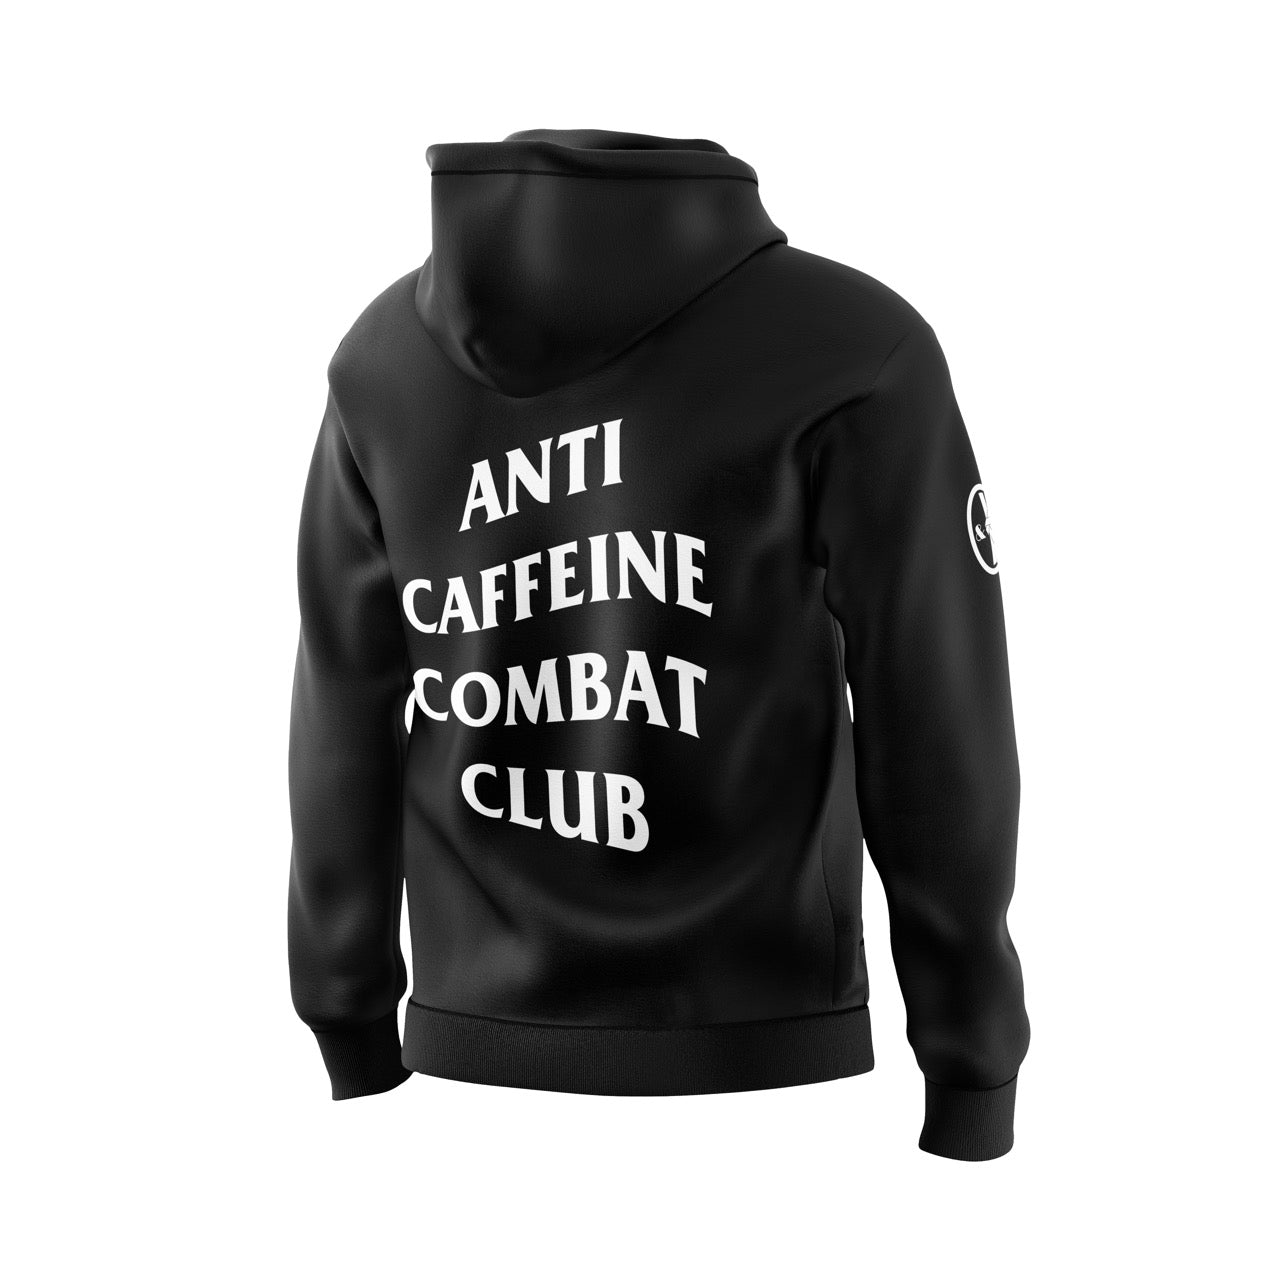 Anti Caffeine Combat Club Hoodie - Coffee&Kimuras